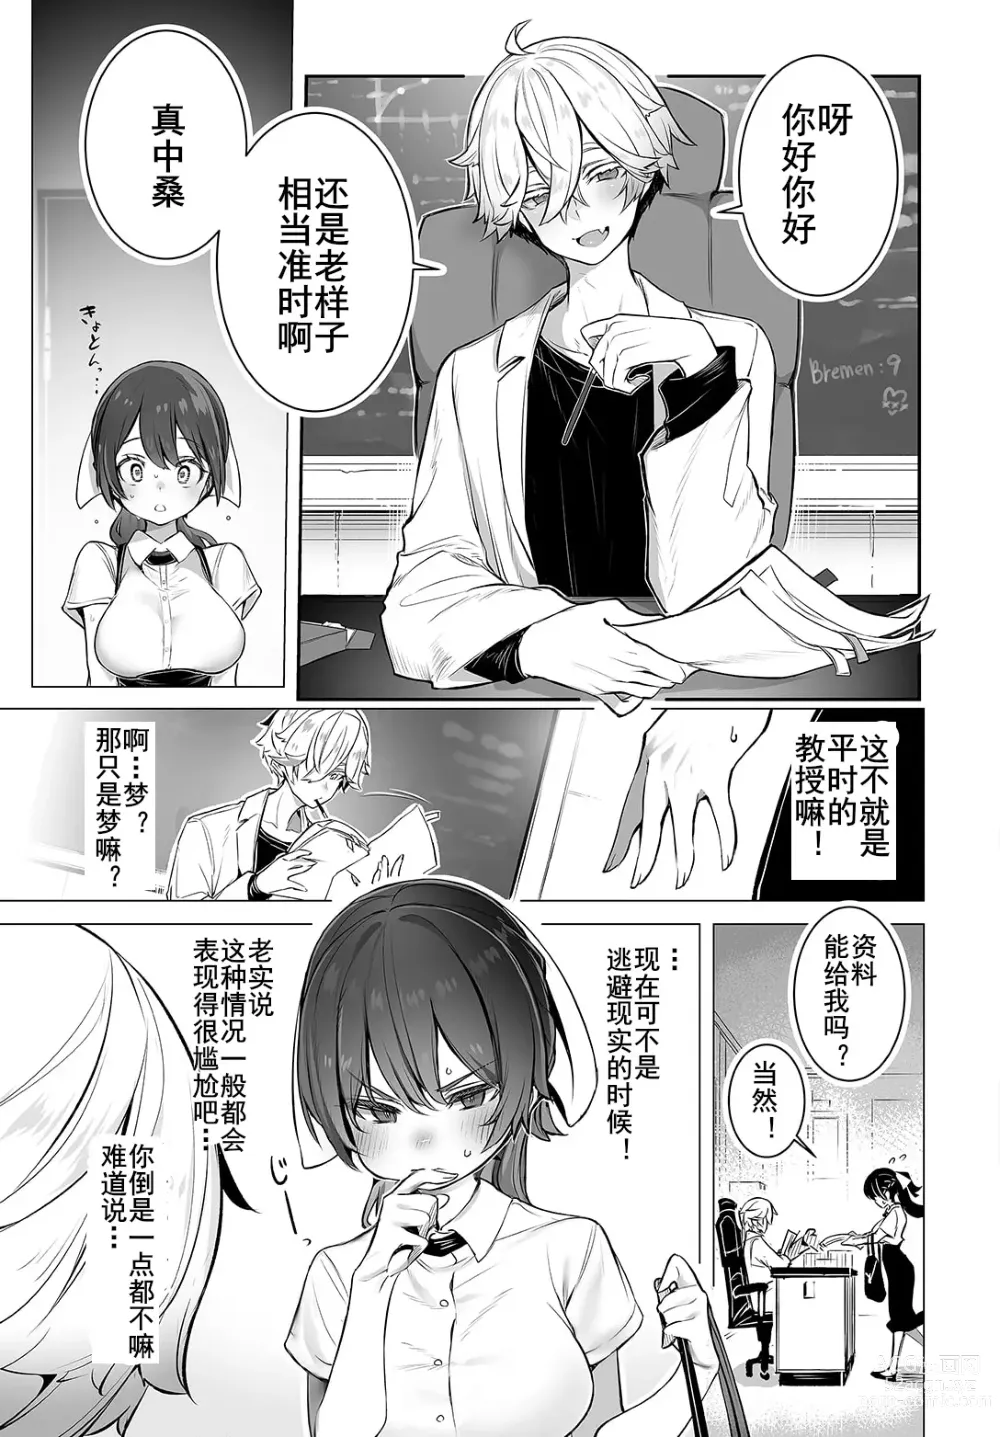 Page 4 of manga 东京黑匣子-抖S教授的疑案报告 10